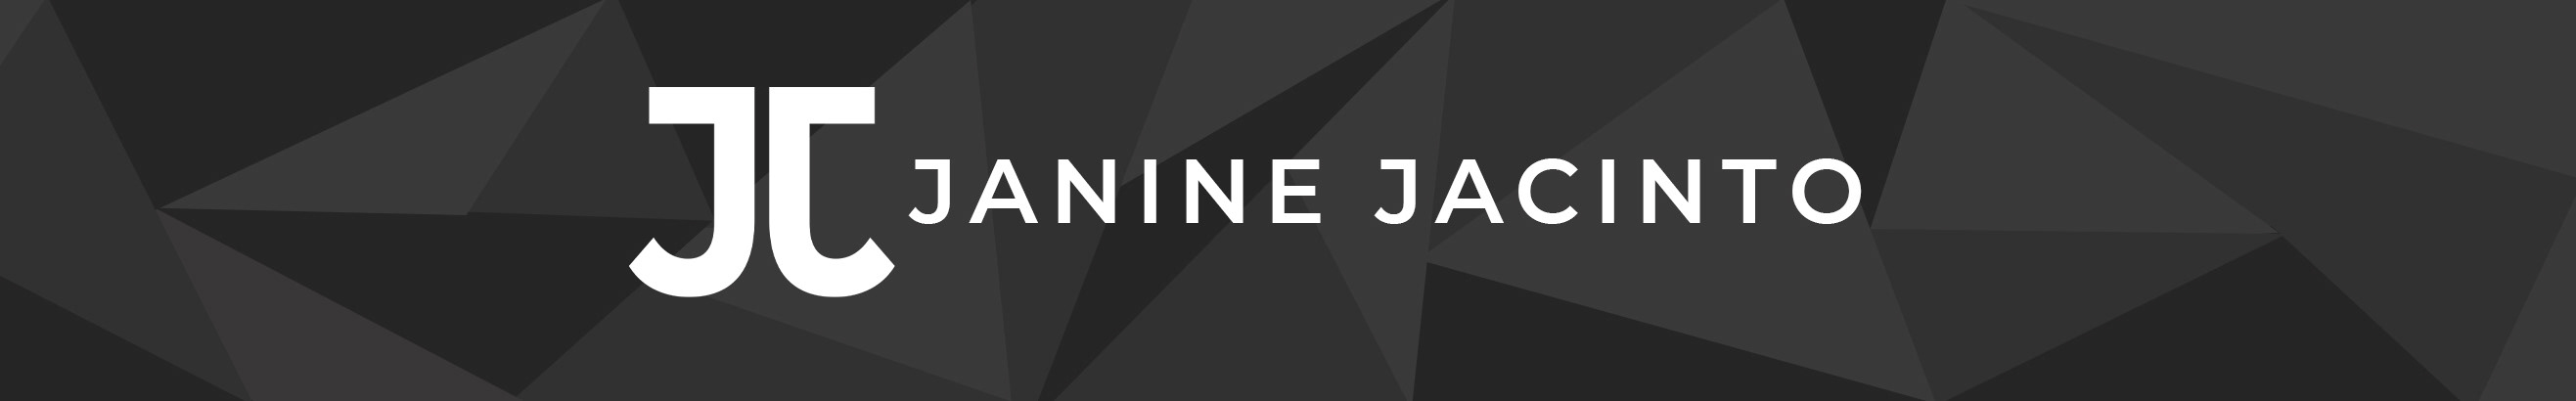 Janine Jacinto's profile banner